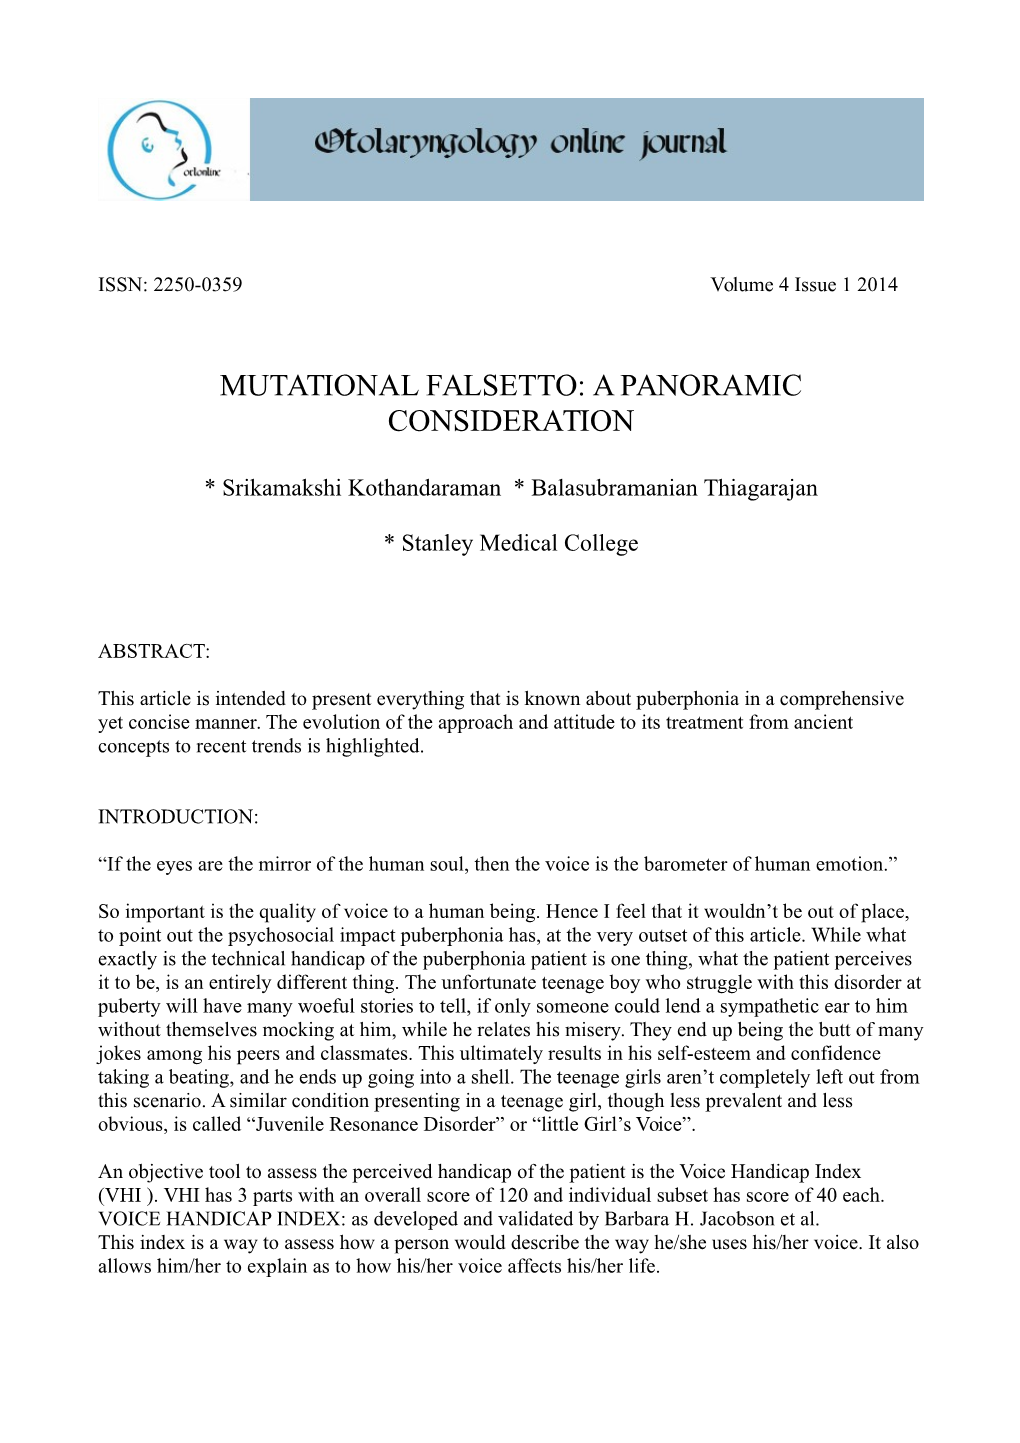 Mutational Falsetto: a Panoramic Consideration